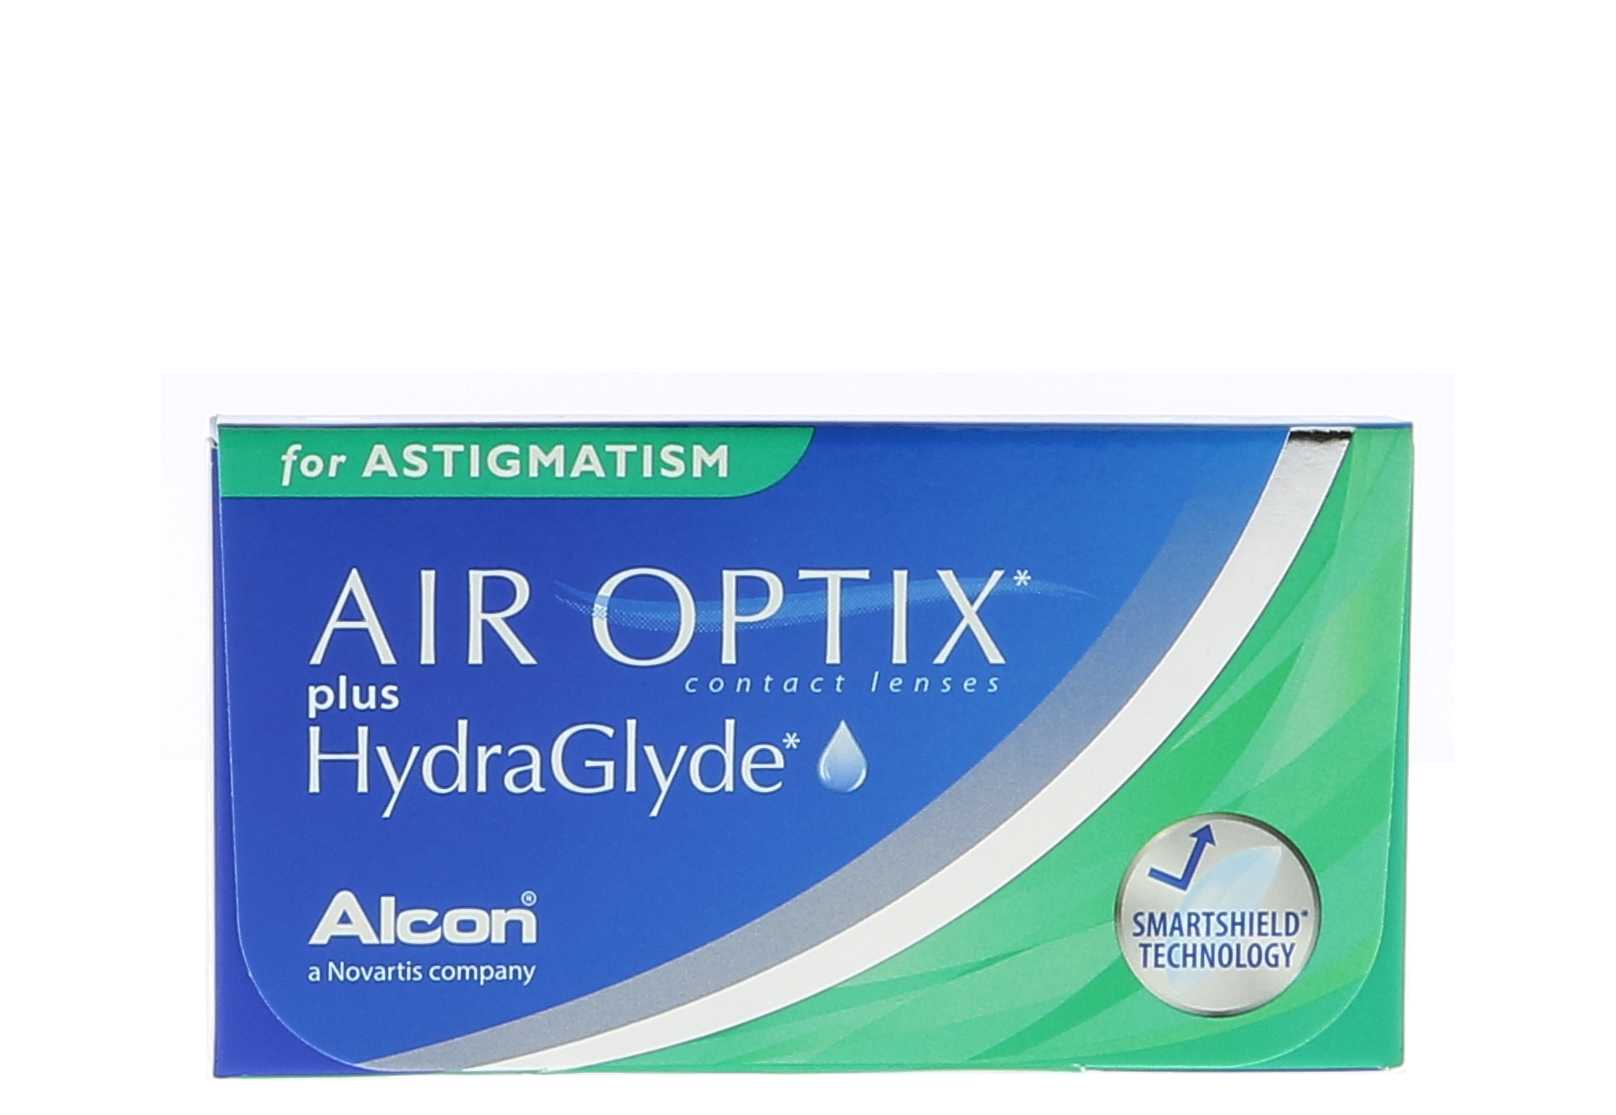  AIR OPTIX PLUS HYDRAGLYDE FOR ASTIGMATISM 3 lentilles ALCON